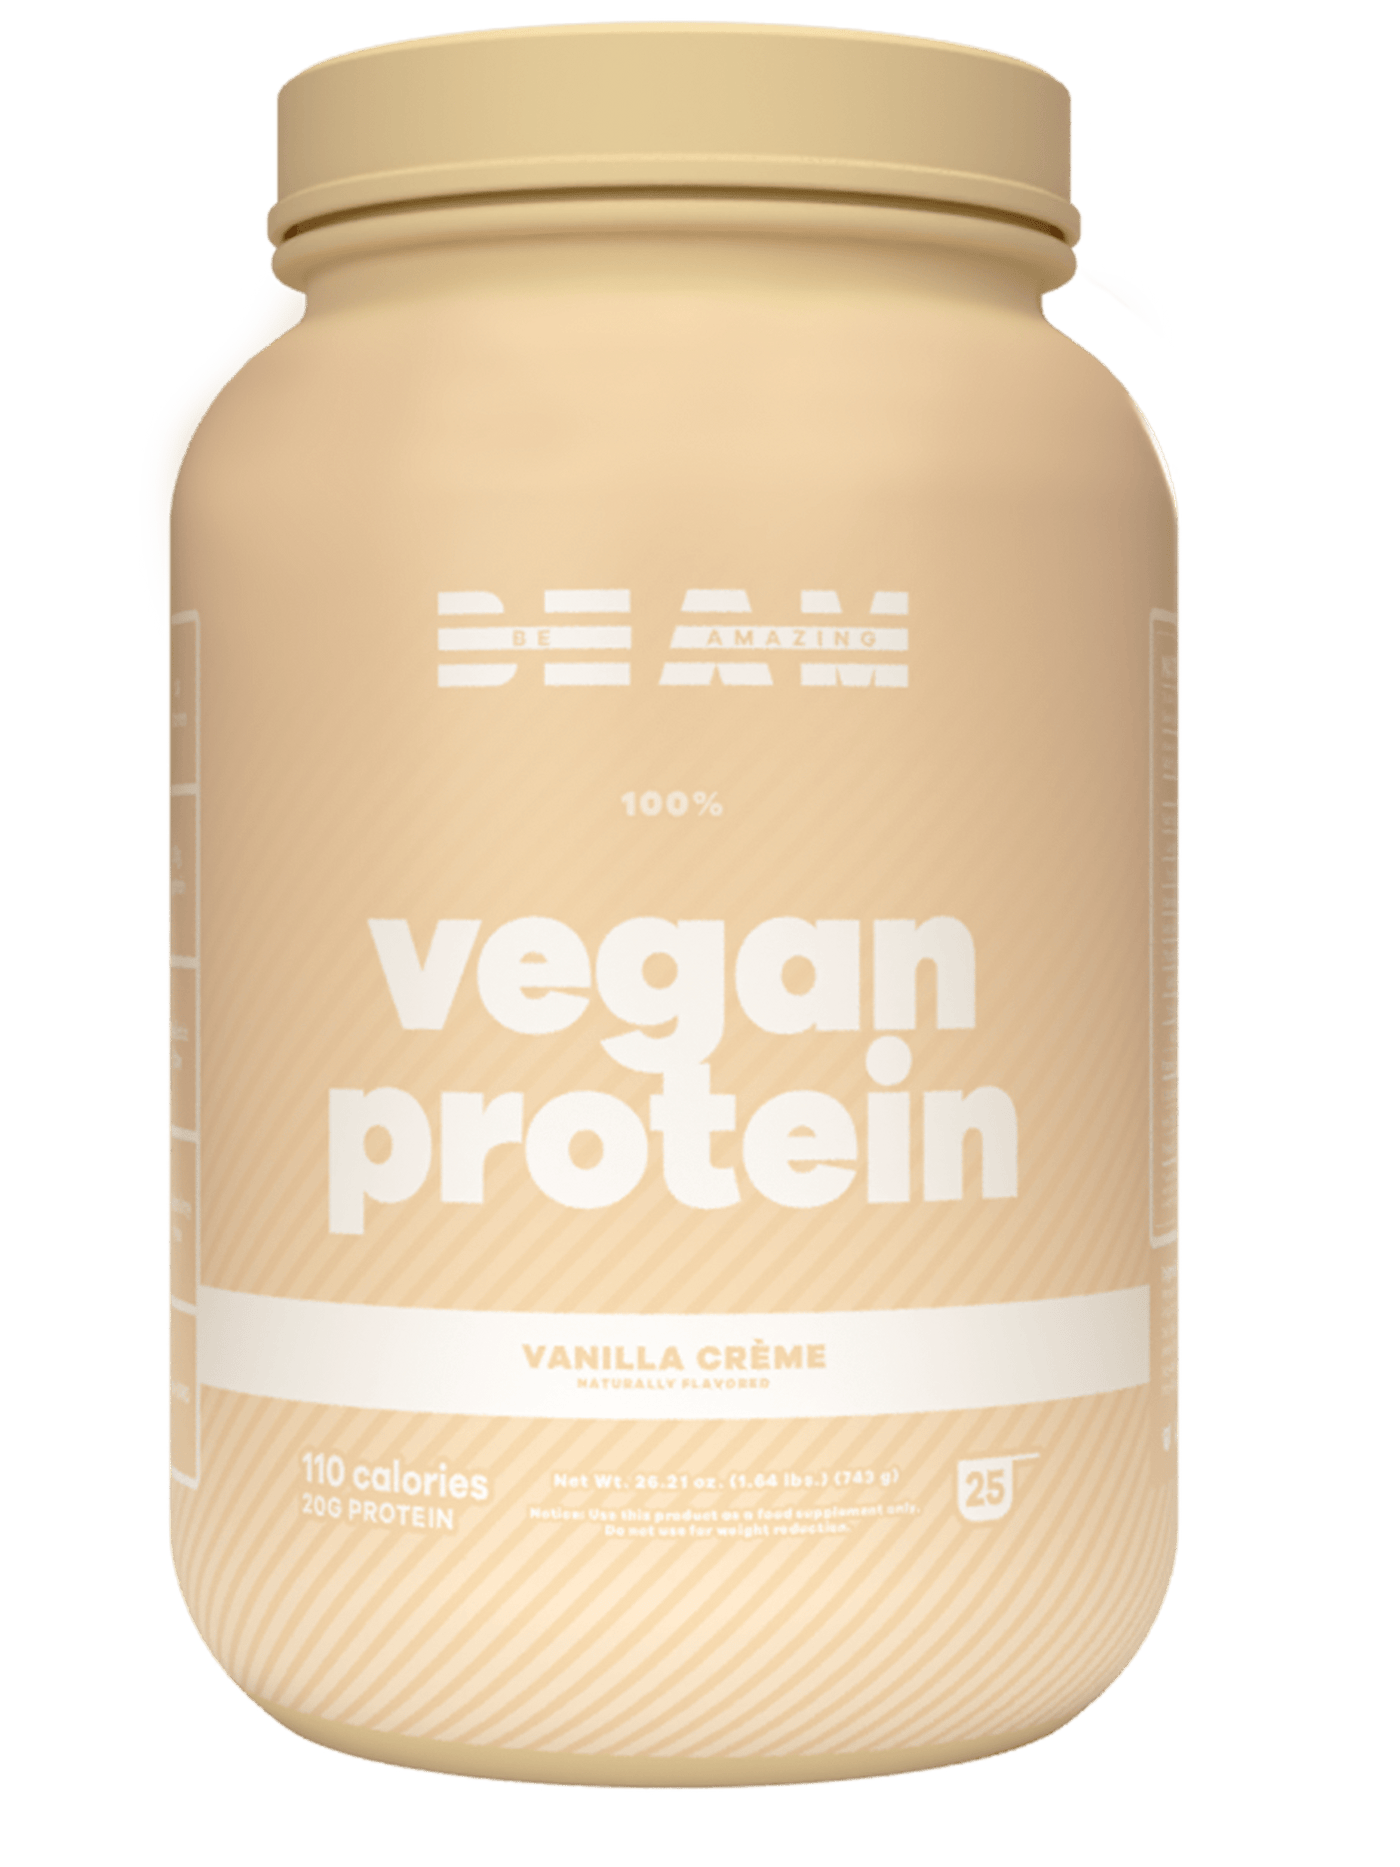 Vanilla Creme Vegan Protein#25 Servings / Vanilla Crème